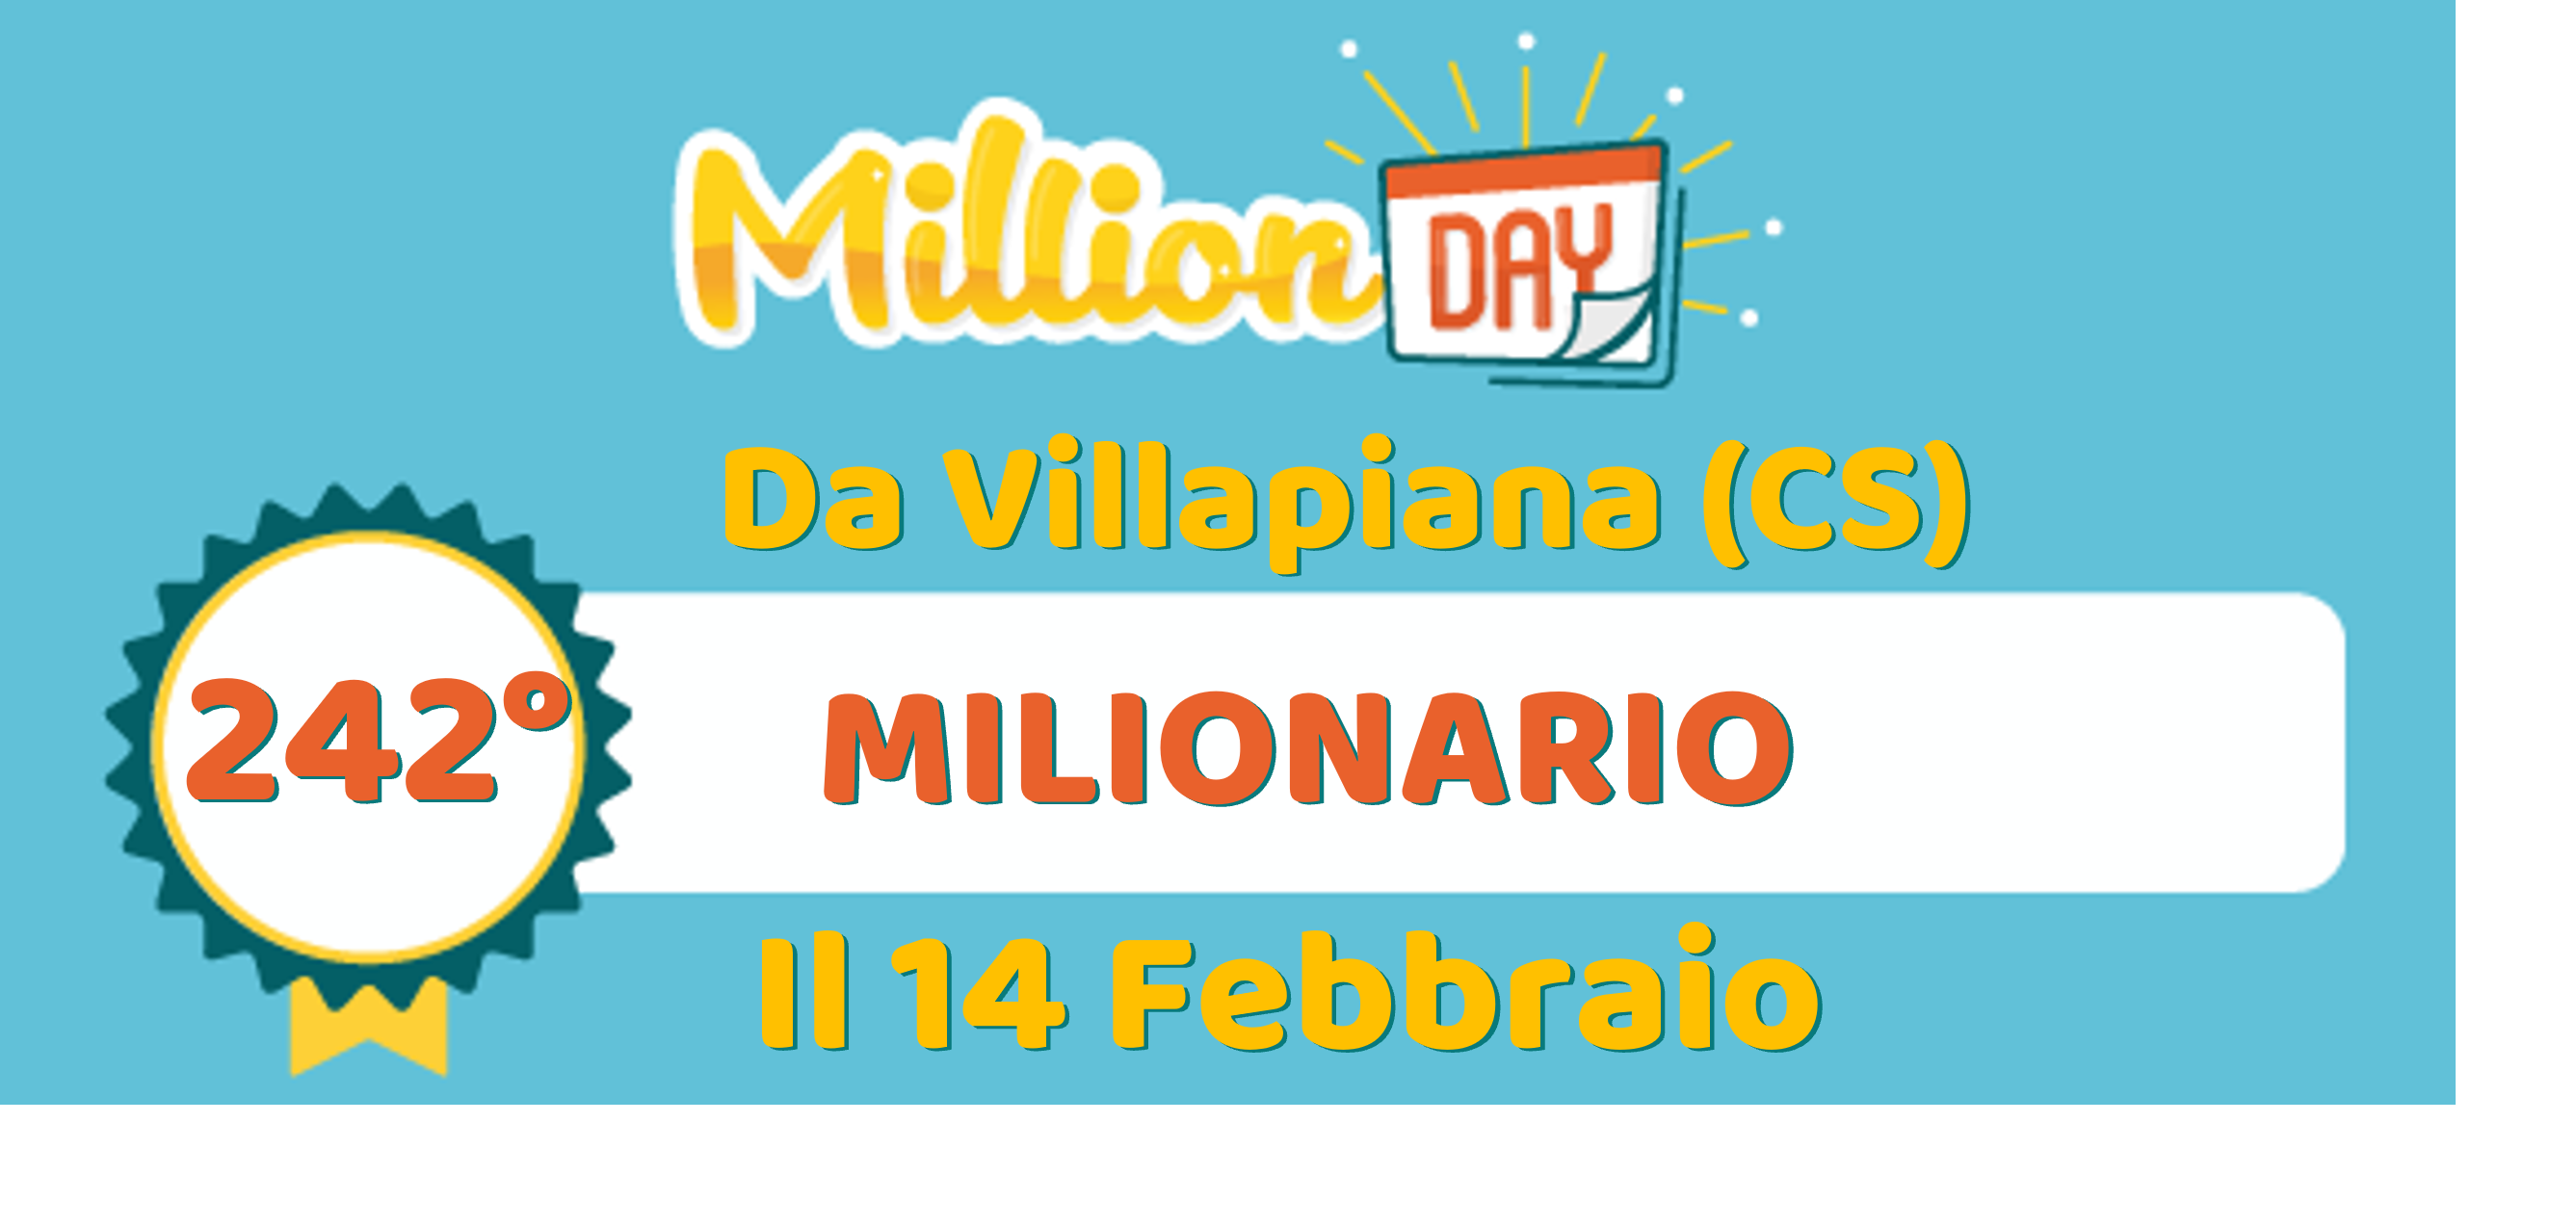 vincita MillionDAY da Villapiana